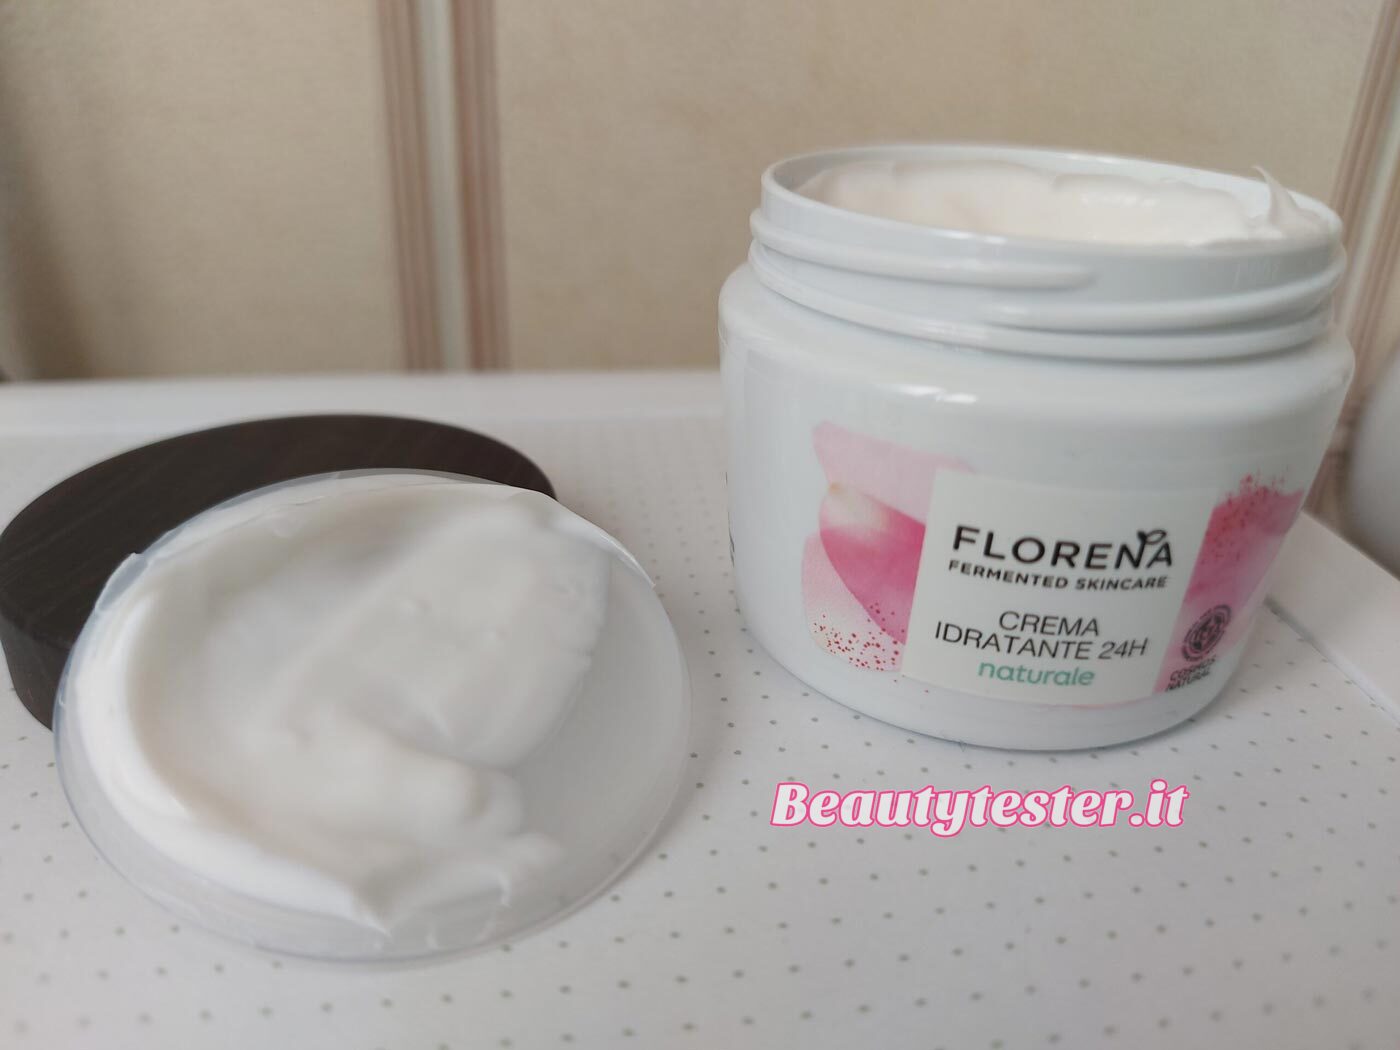 FLORENA Fermented Skincare Crema idratante 24h naturale